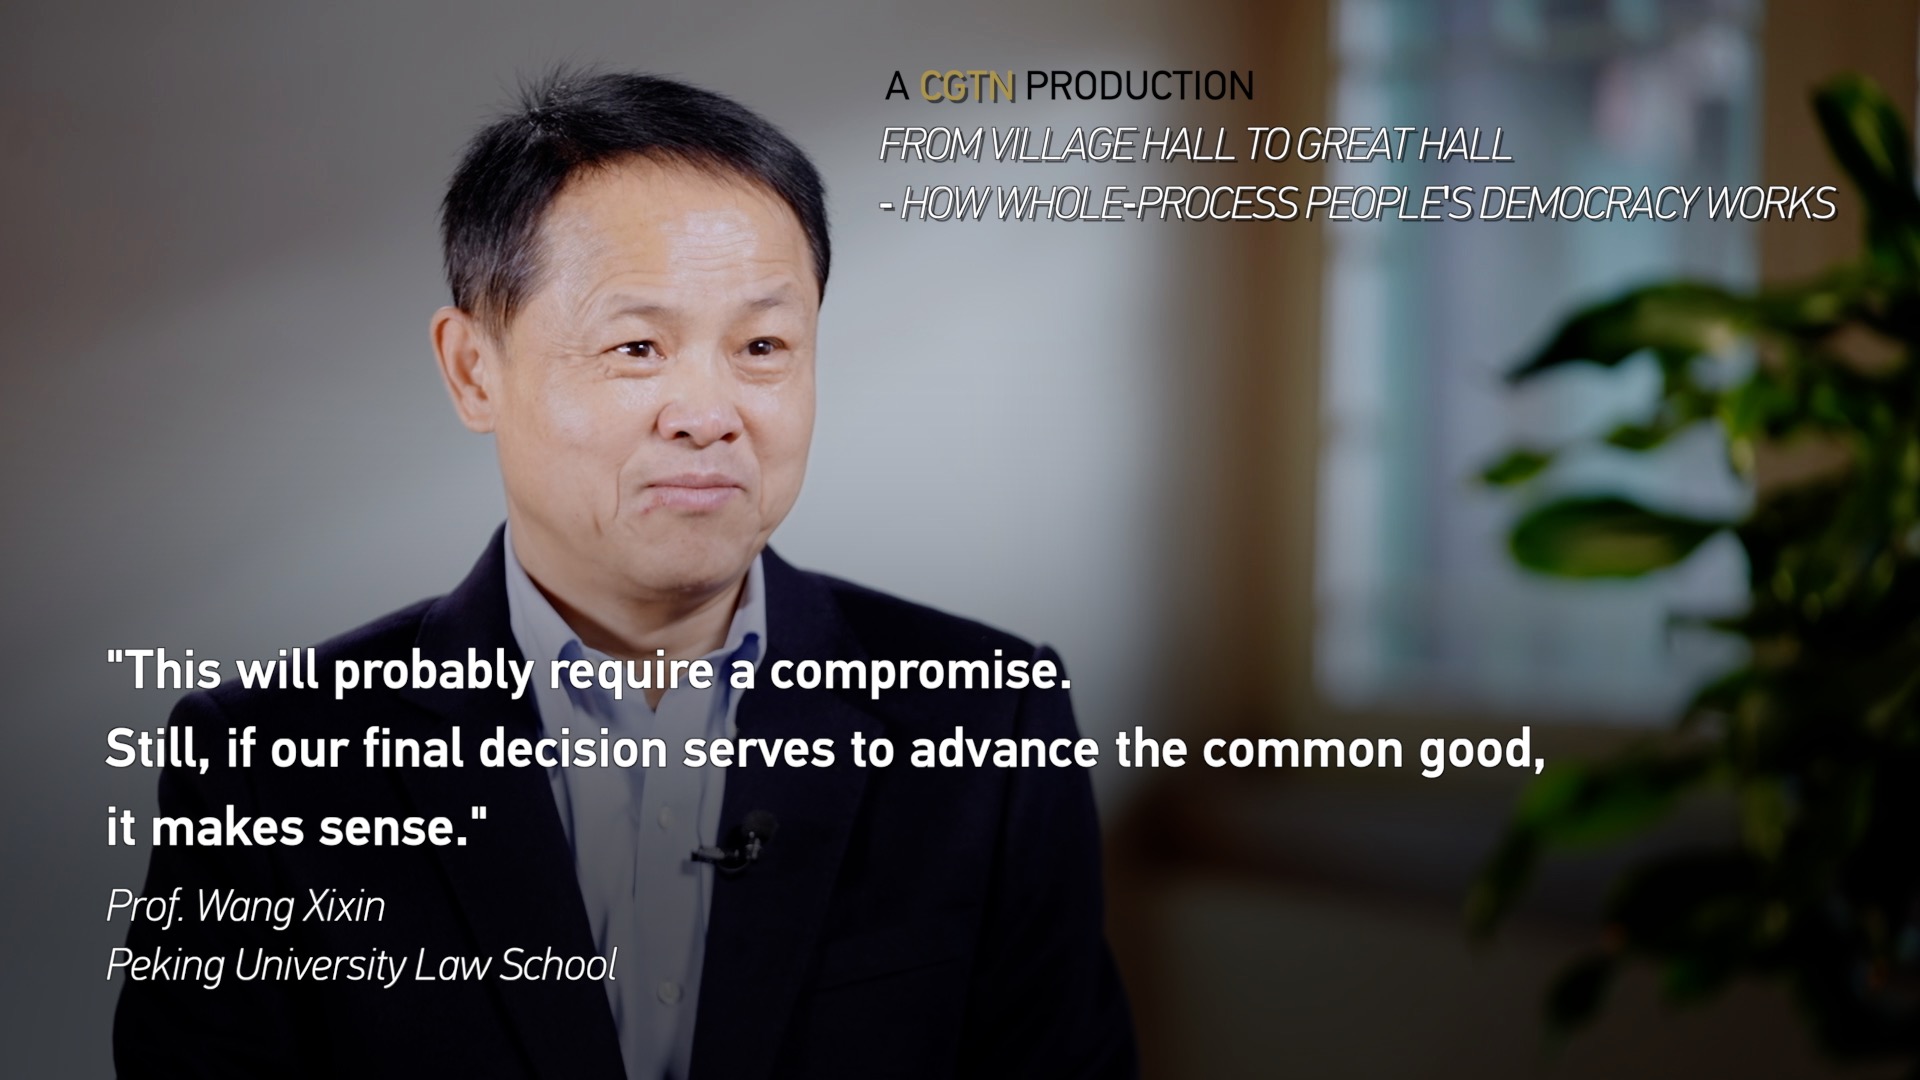 If our final decision serves to advance the common good, it makes sense, said Professor Wang Xixin of Peking University Law School. /CGTN